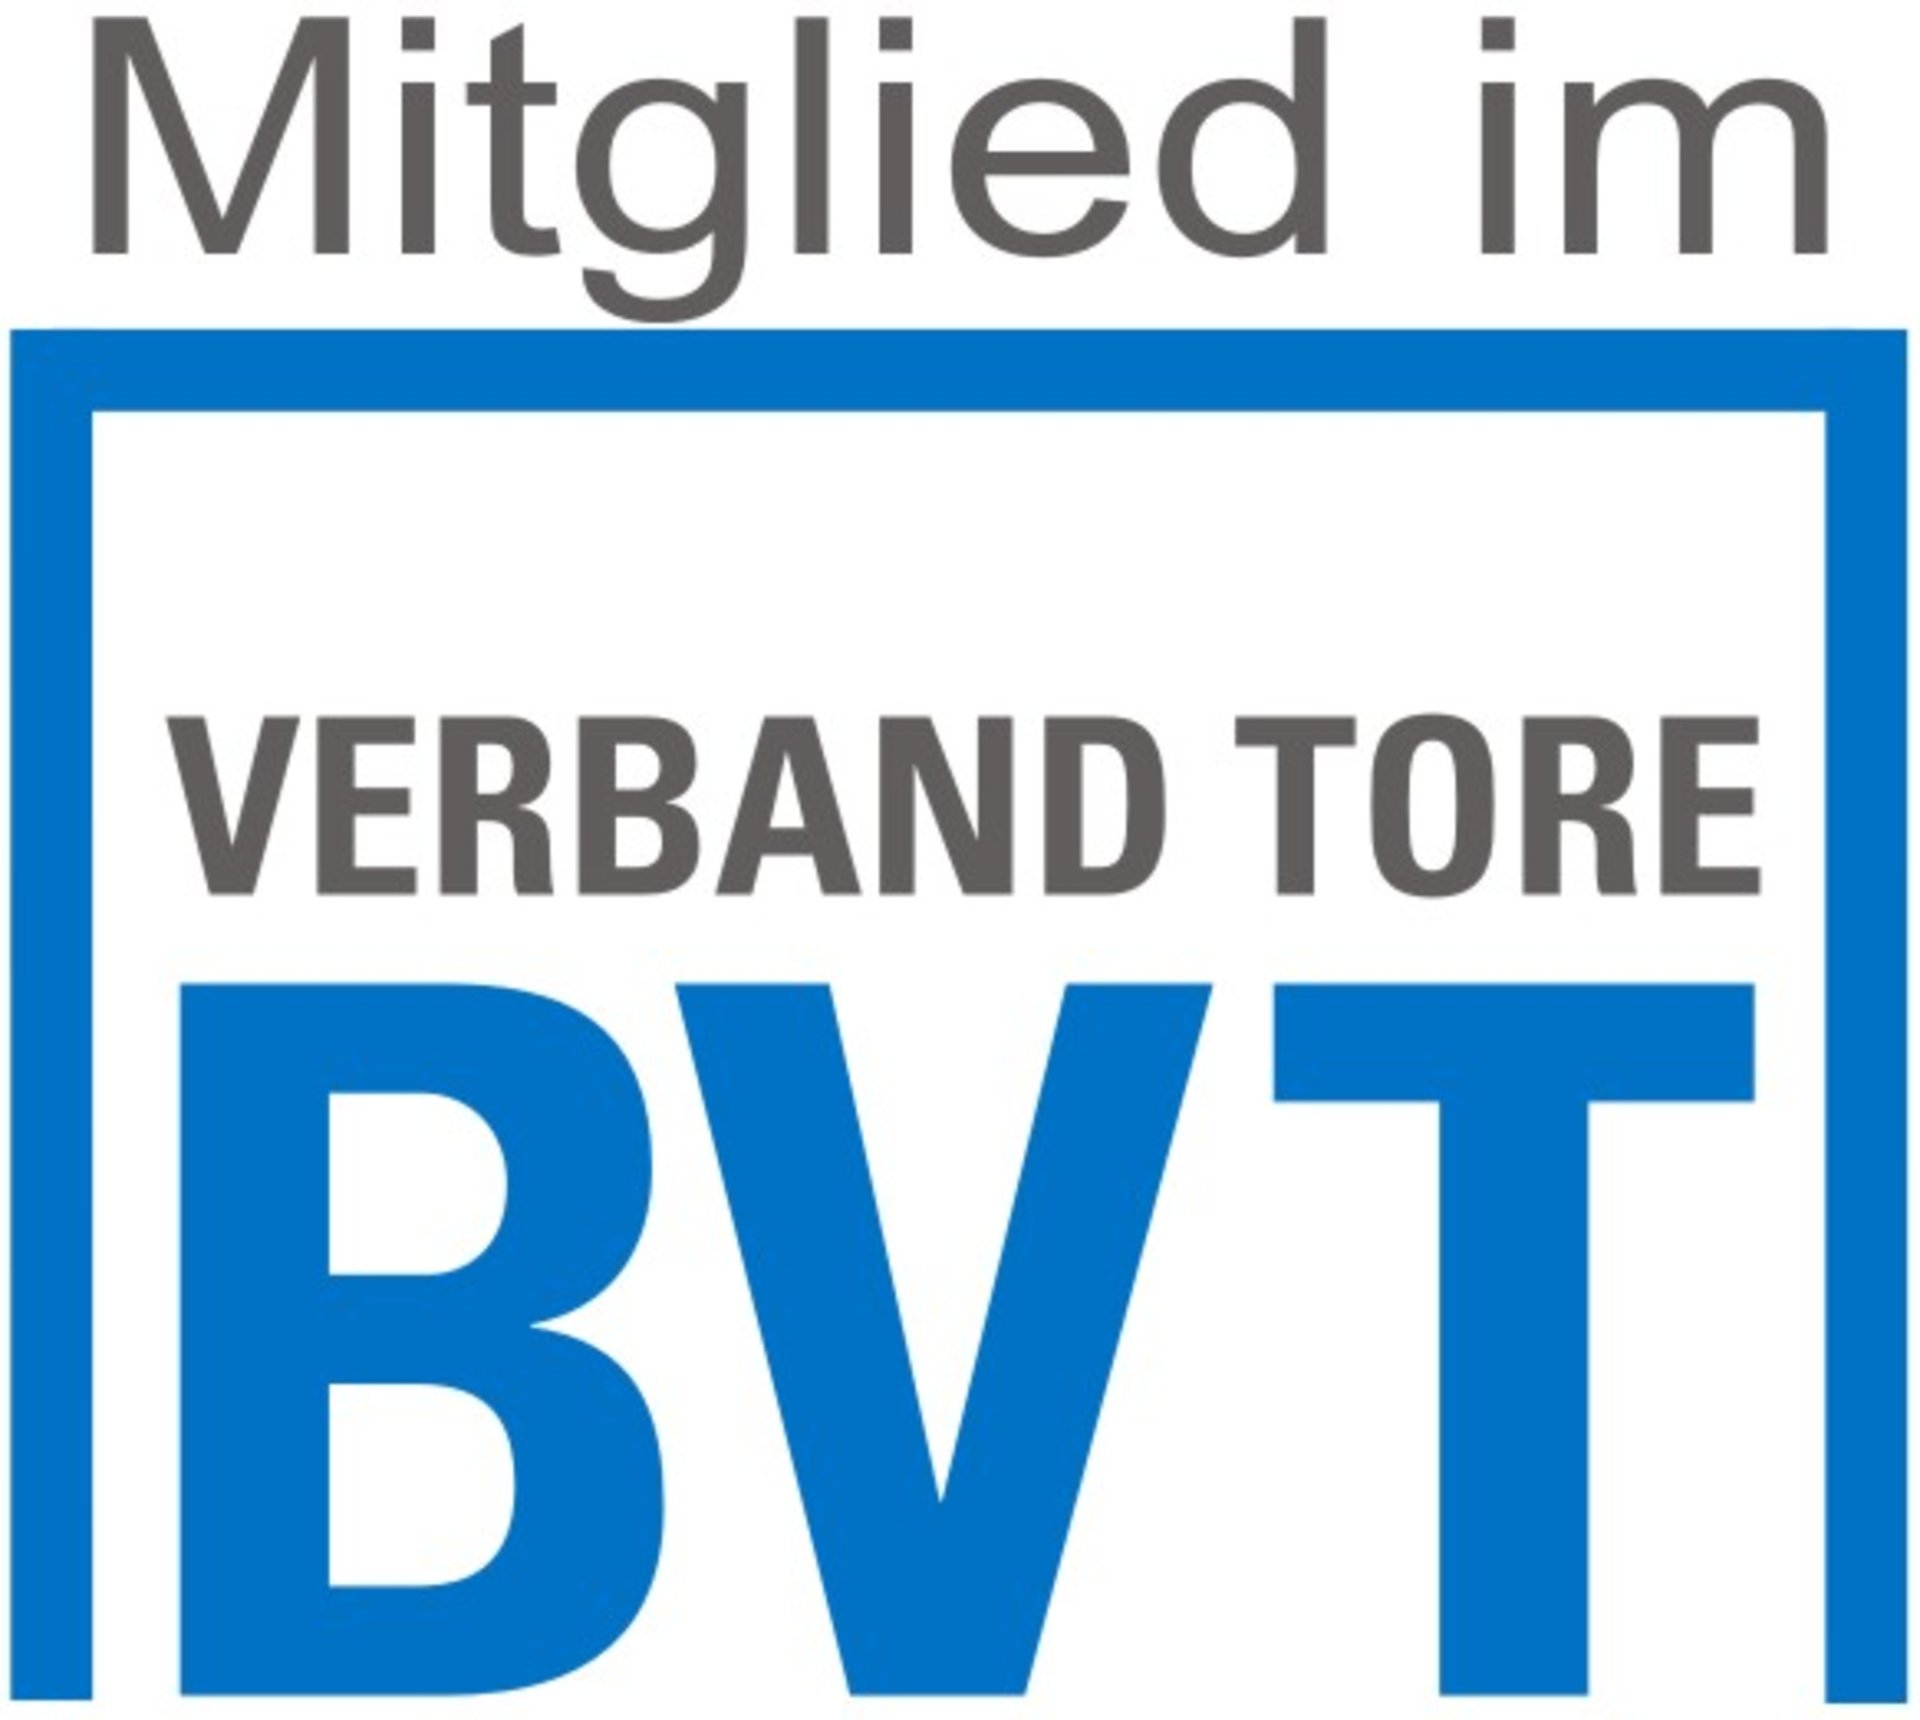 BVT – Verband Tore